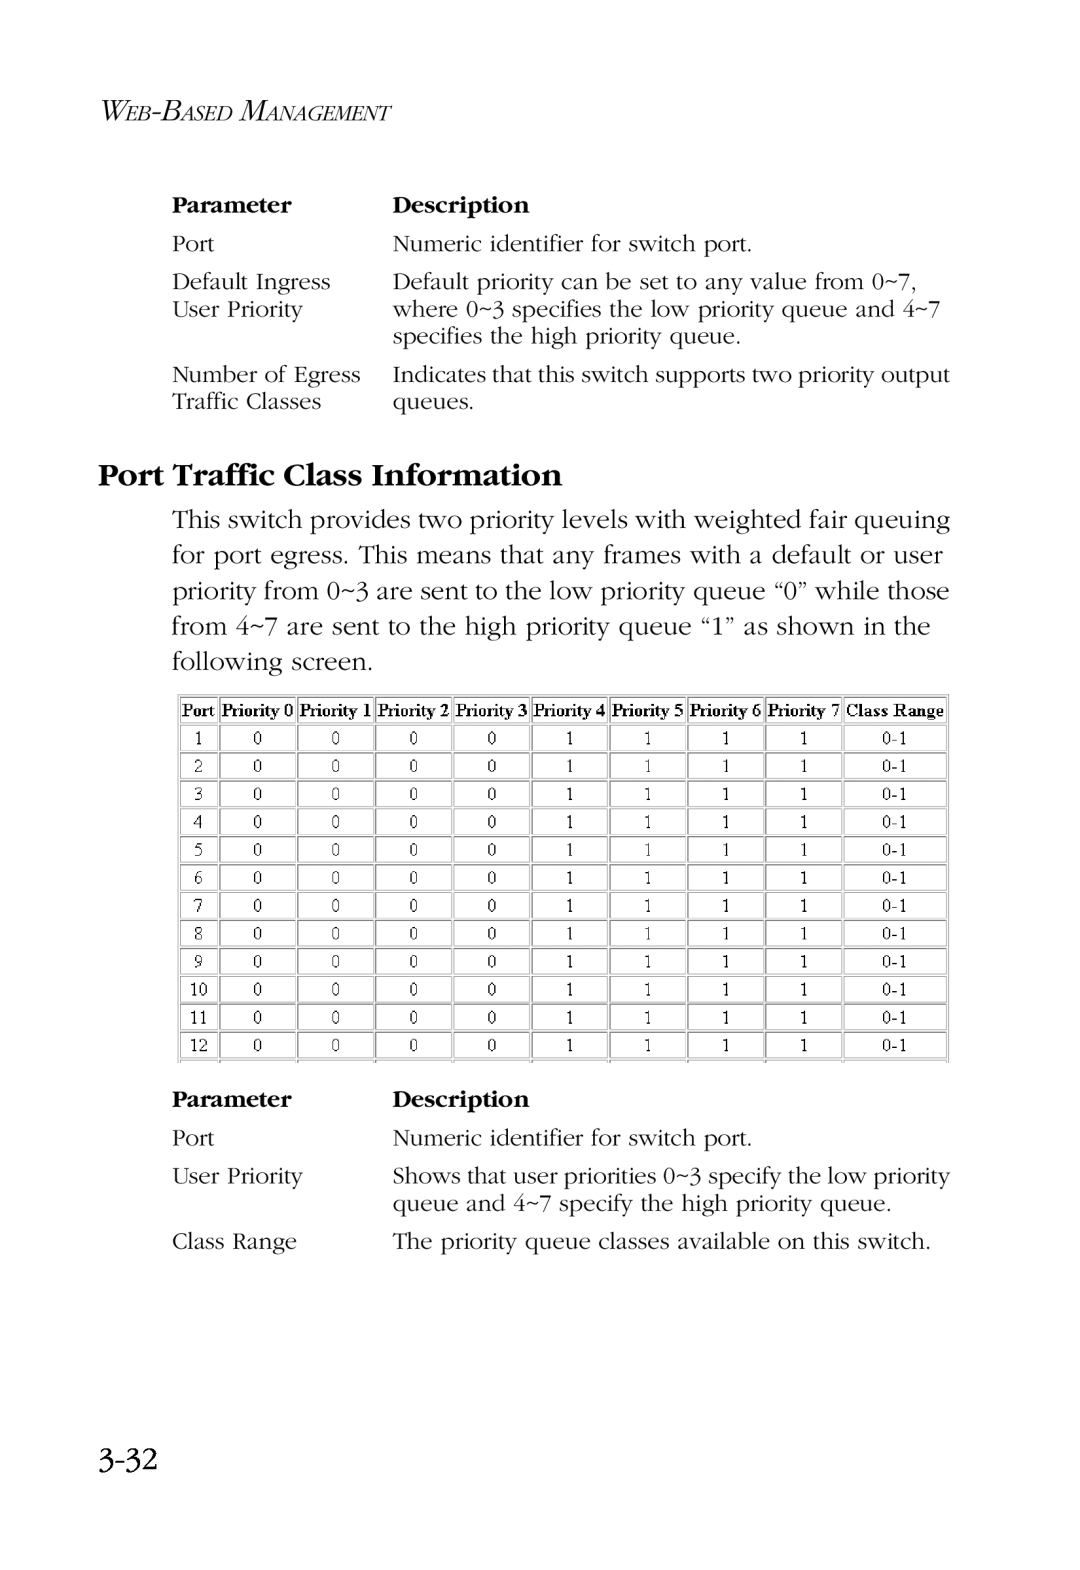 SMC Networks SMC6924VF manual Port Traffic Class Information, 3-32, Web-Based Management 